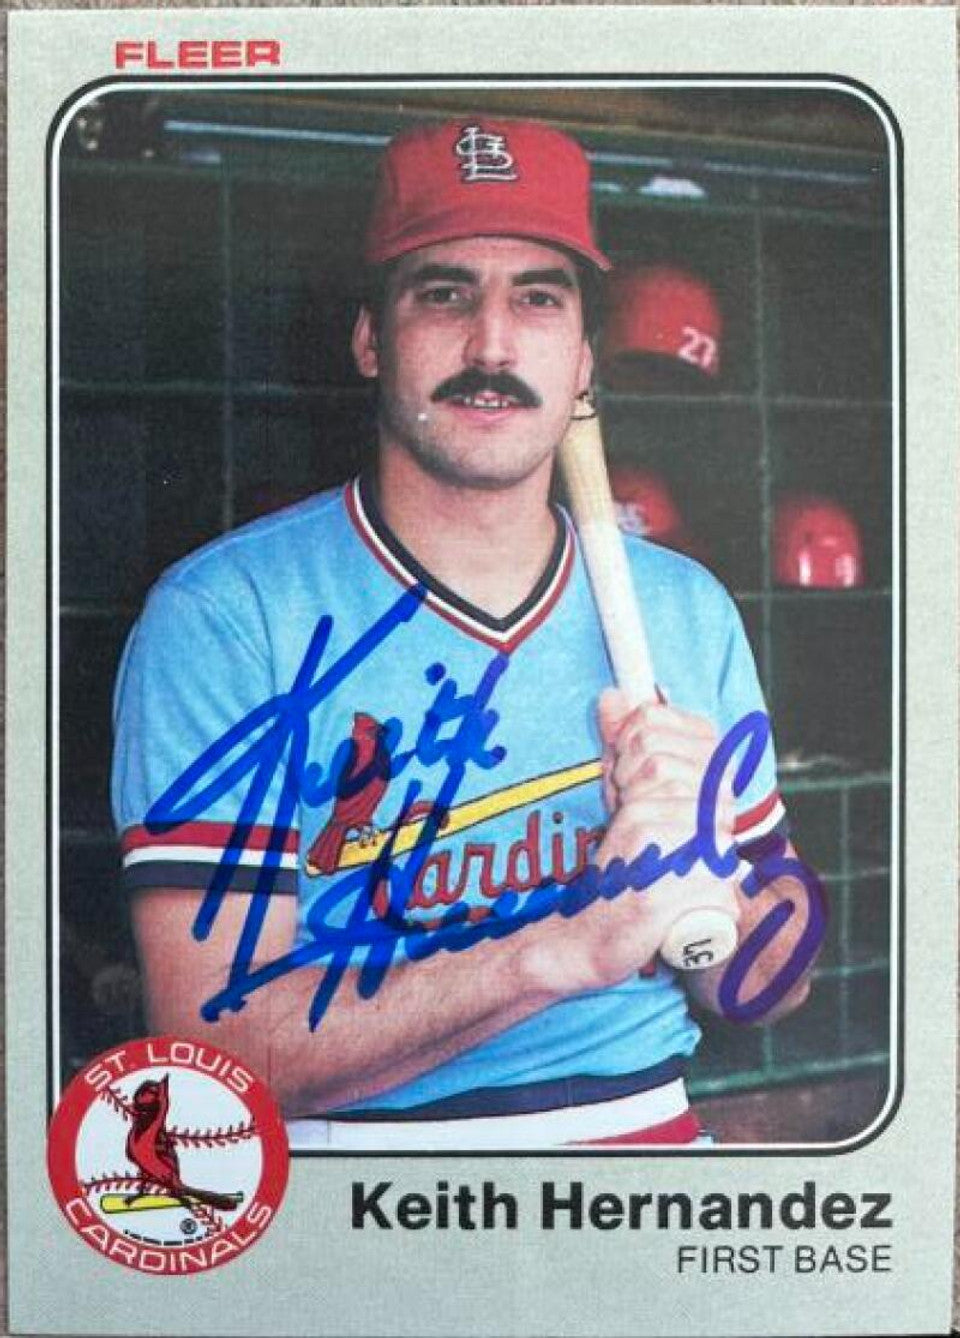 Keith Hernandez Signed 1983 Fleer Baseball Card - St Louis Cardinals